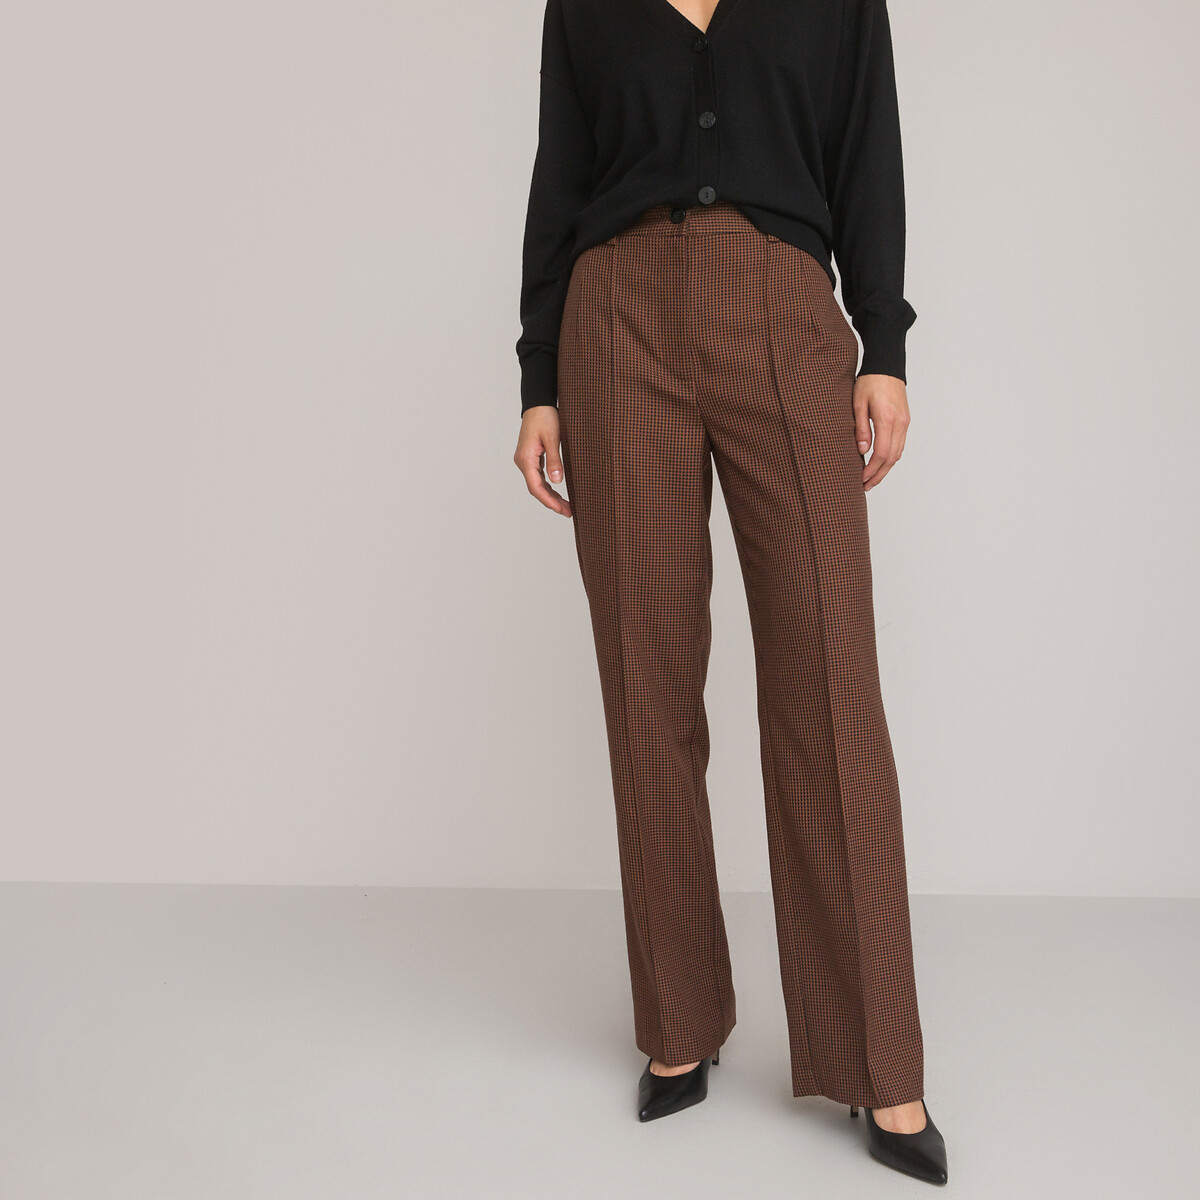 Designer StraightLeg Pants for Women  Shop Now on FARFETCH